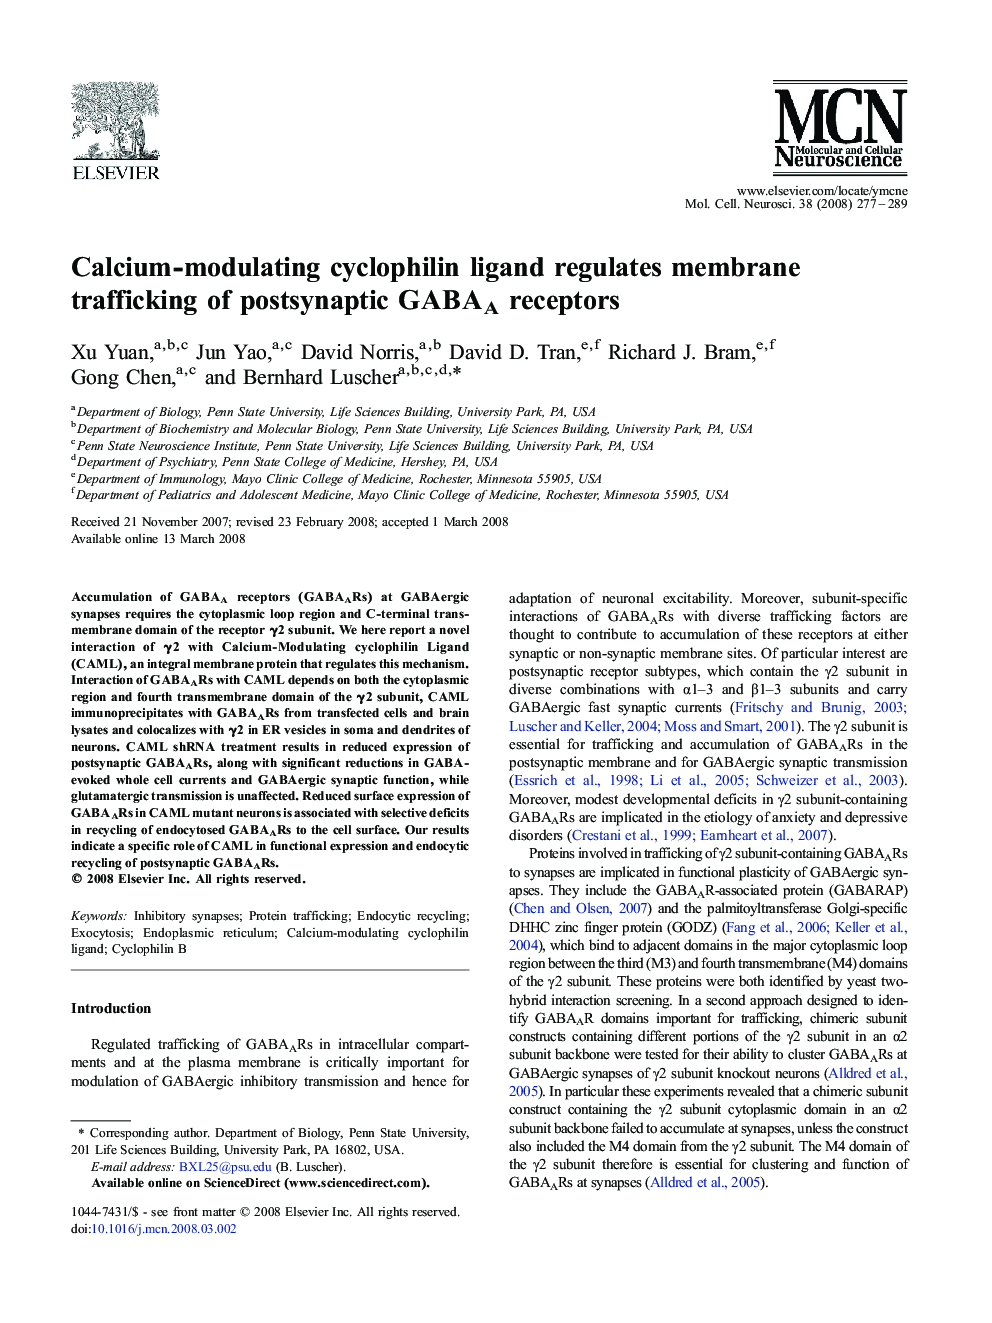 Calcium-modulating cyclophilin ligand regulates membrane trafficking of postsynaptic GABAA receptors